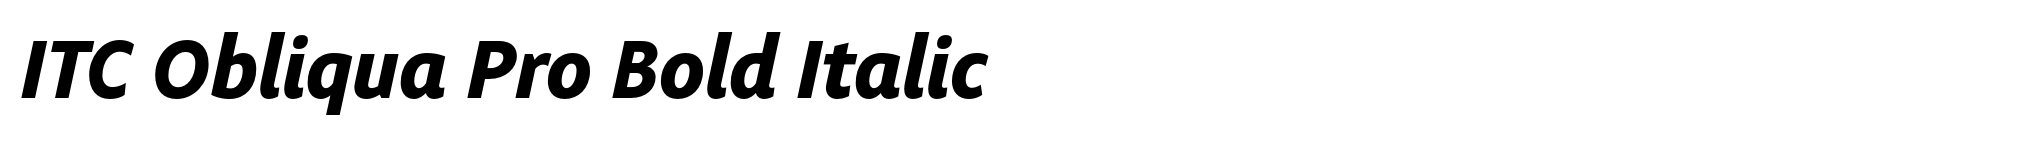 ITC Obliqua Pro Bold Italic image